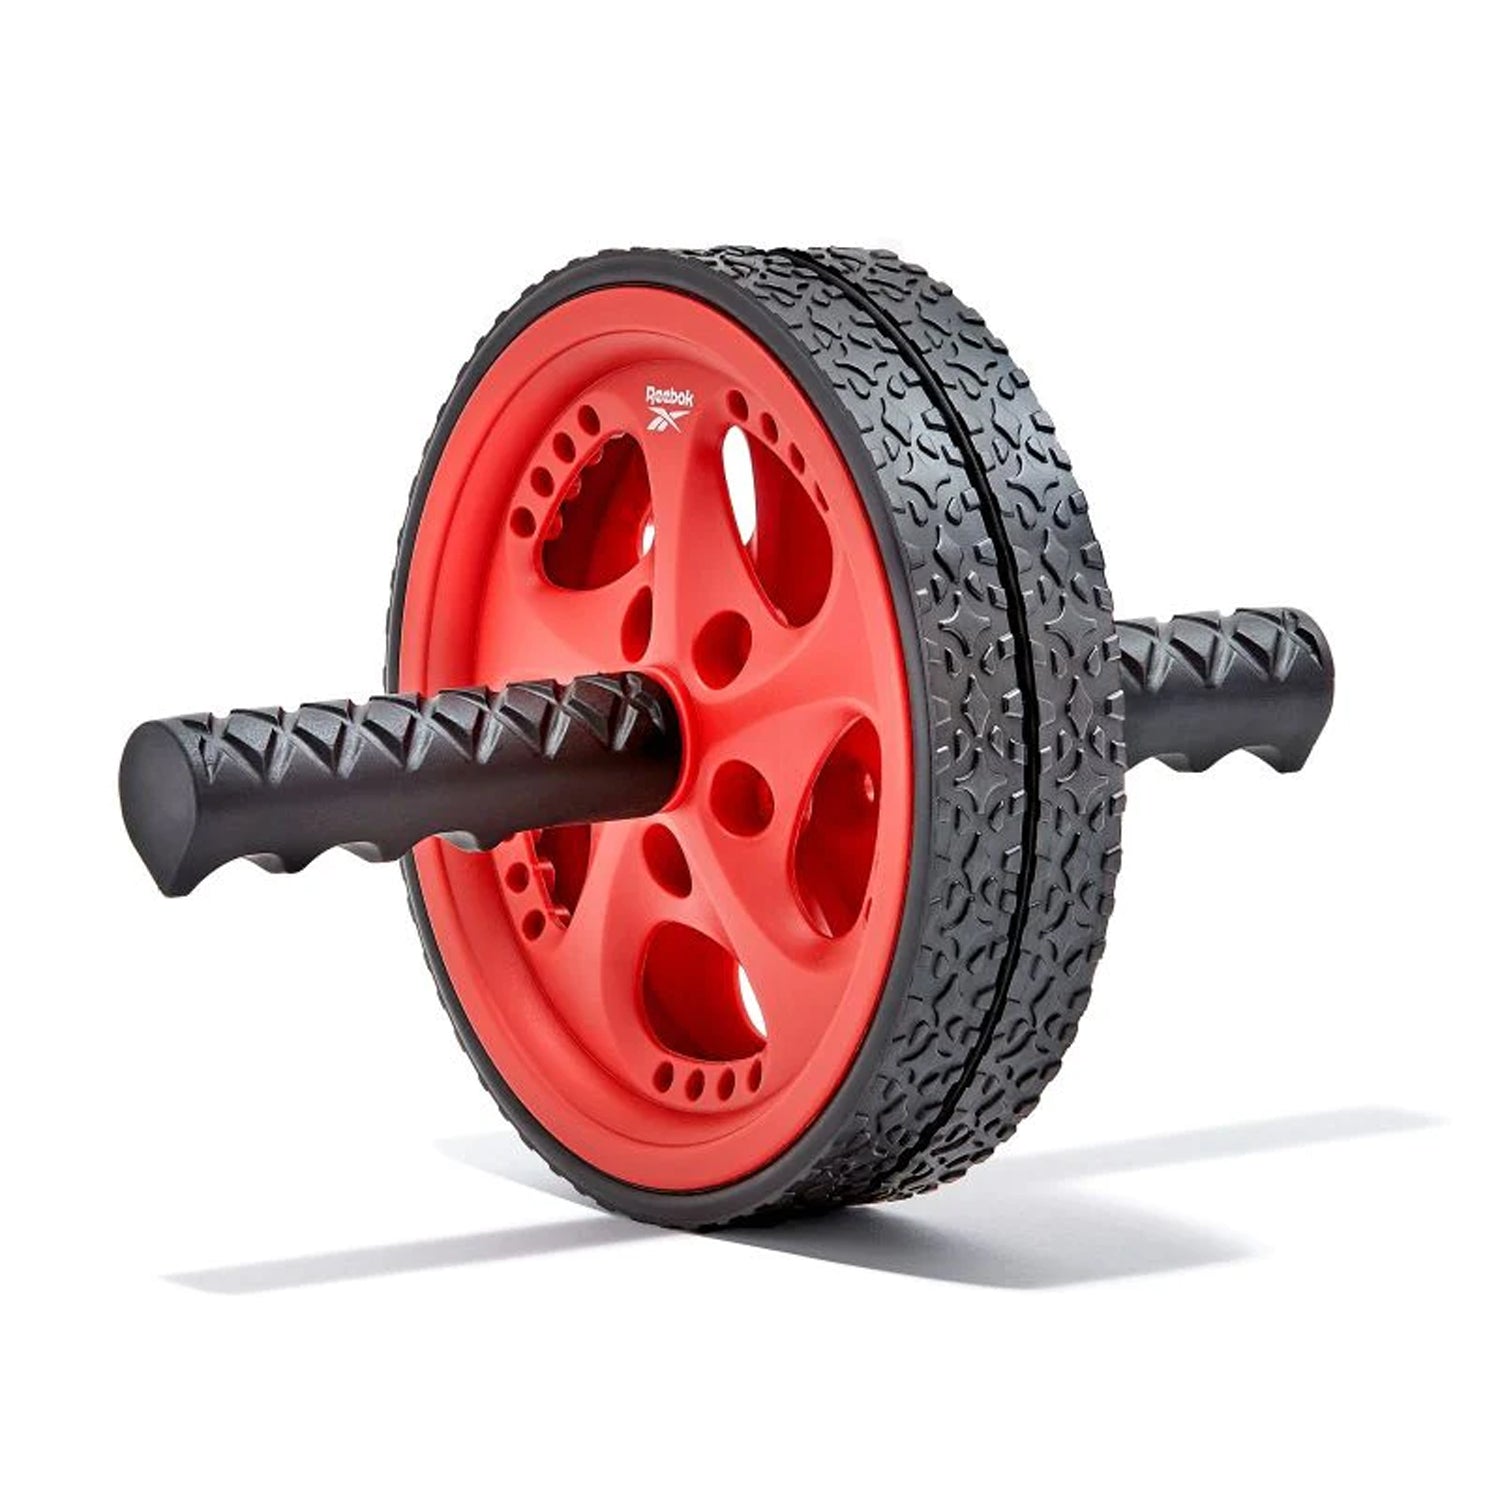 Reebok Fitness RAAC-12236 Ab Wheel - Best Price online Prokicksports.com